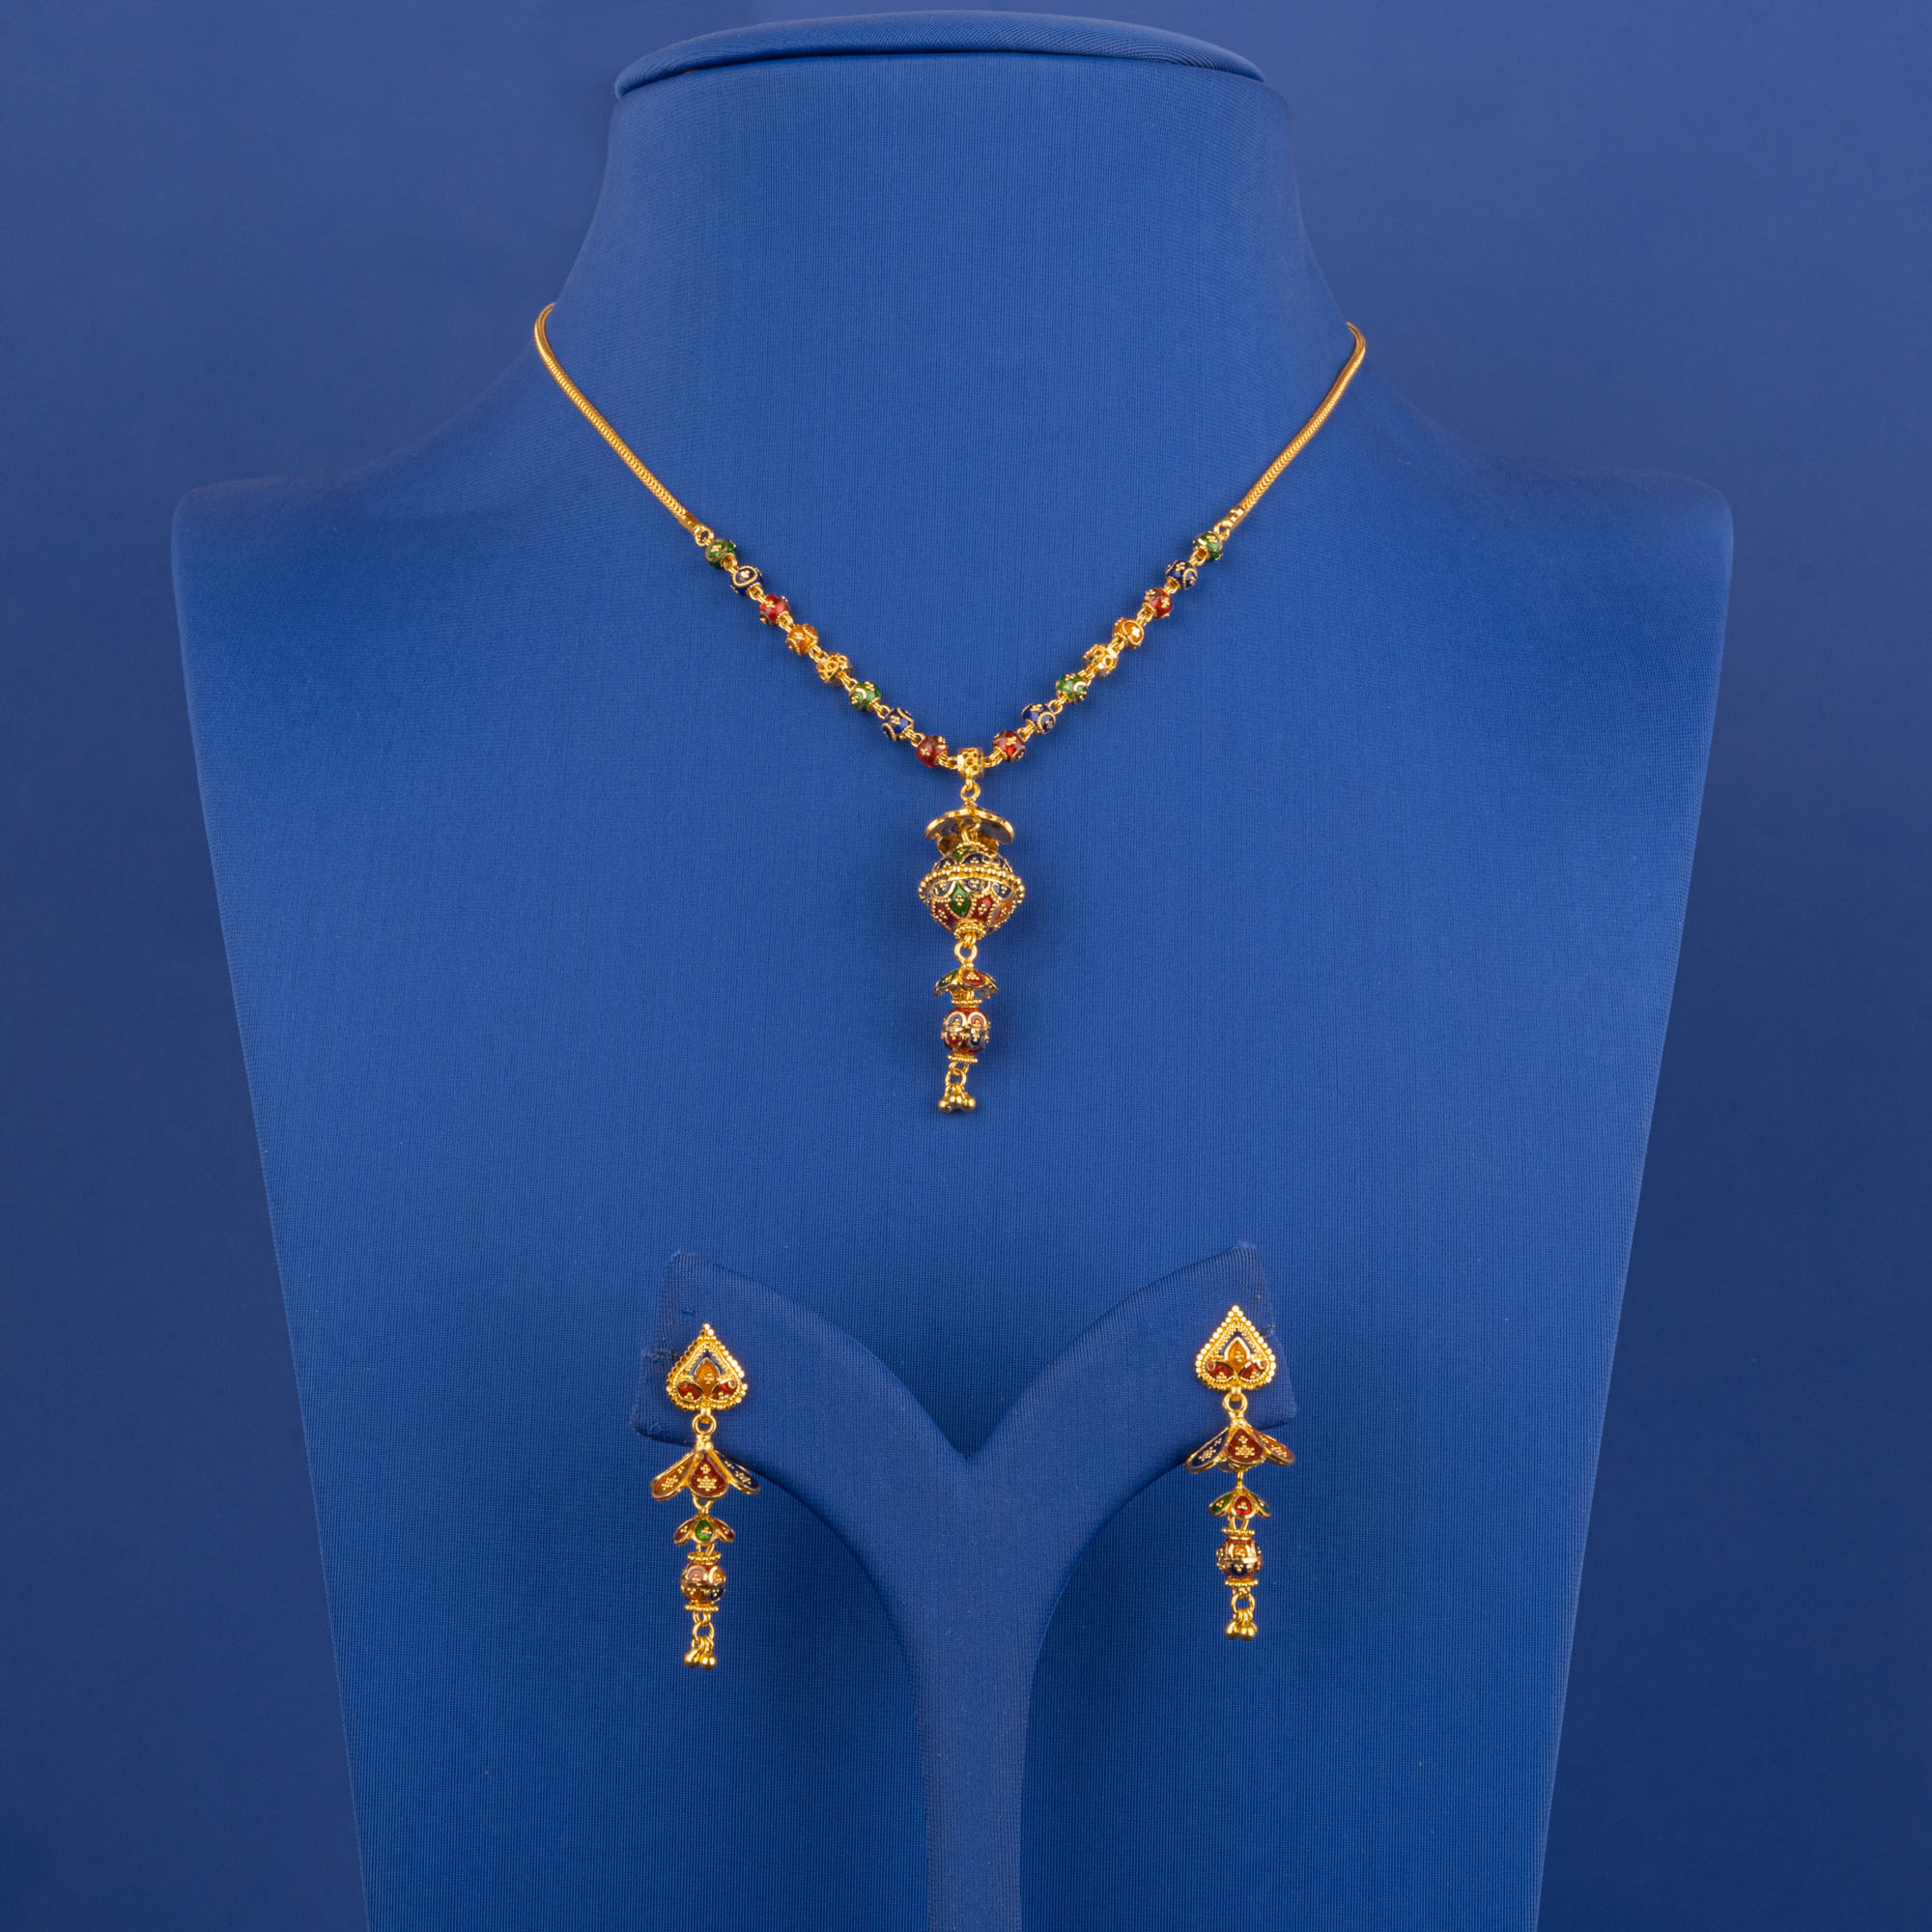 Artisanal Masterpiece: Handmade 22K Gold Minakari Necklace and Earrings Set